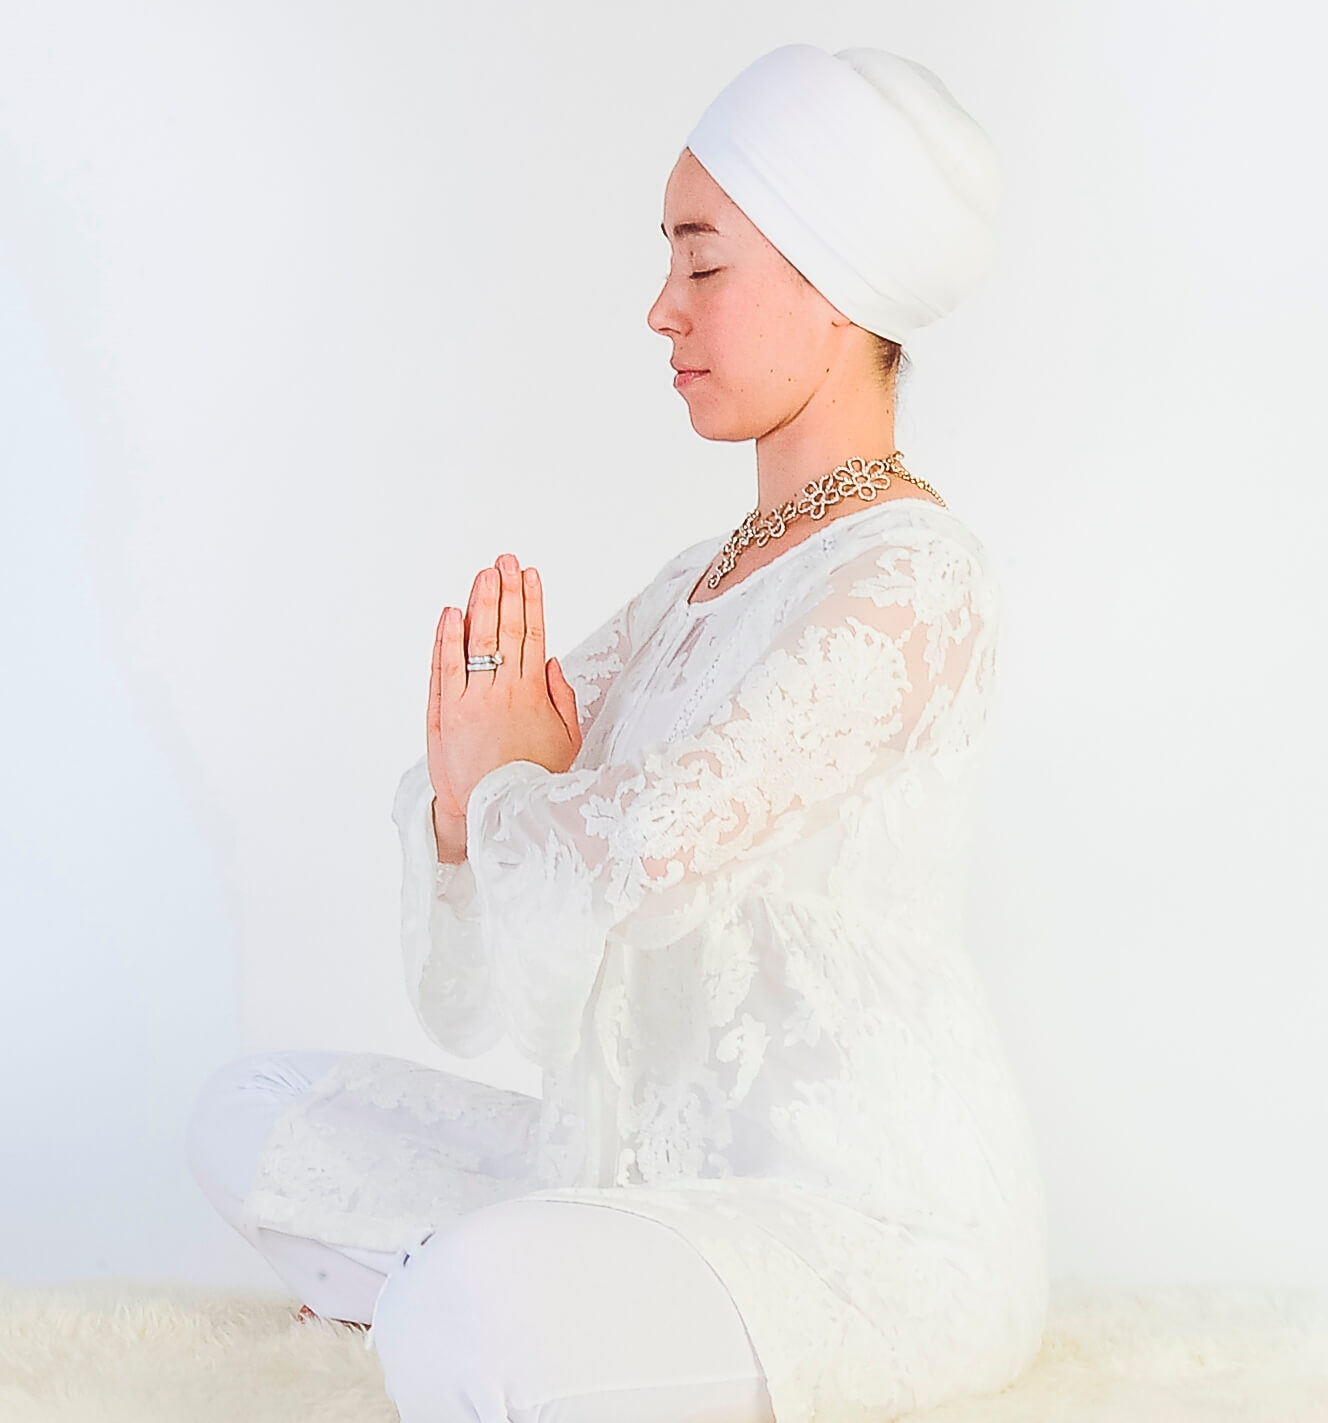 Sending Healing Thoughts Meditation